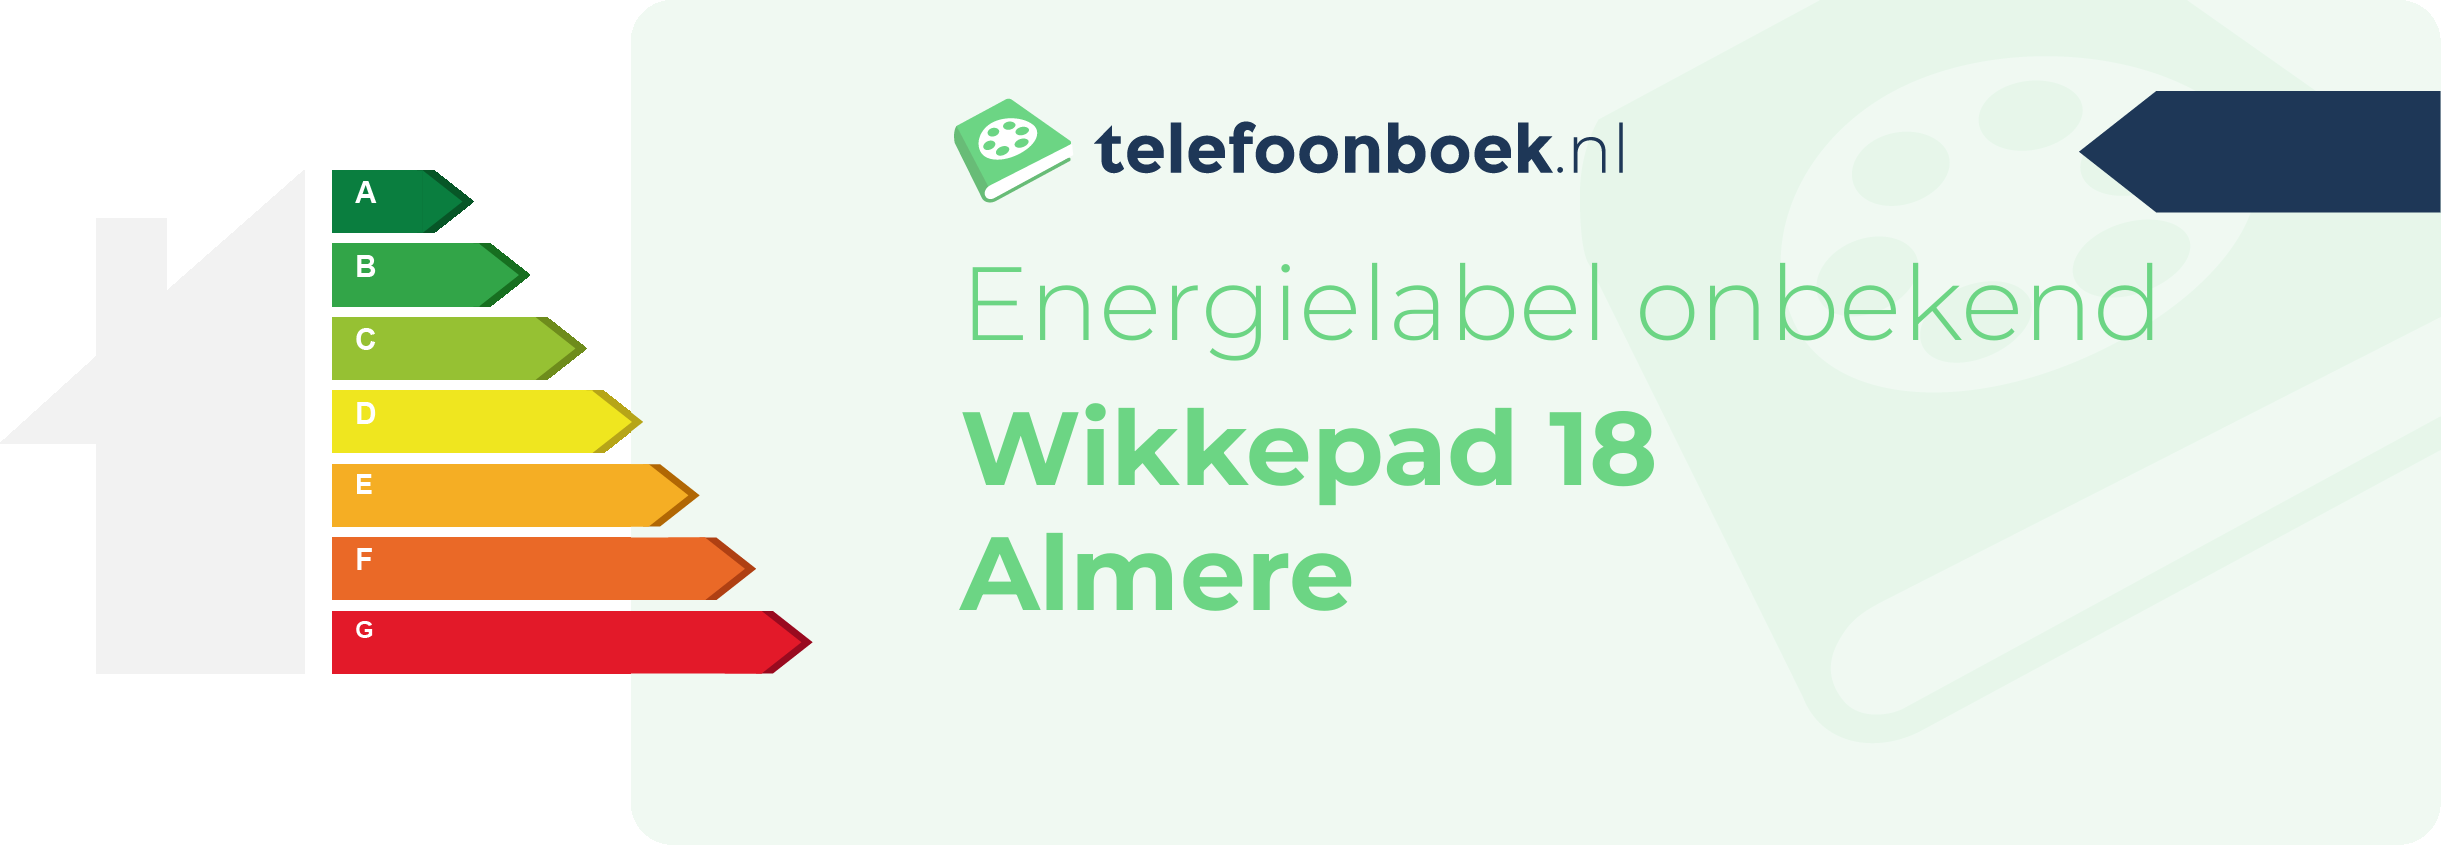 Energielabel Wikkepad 18 Almere